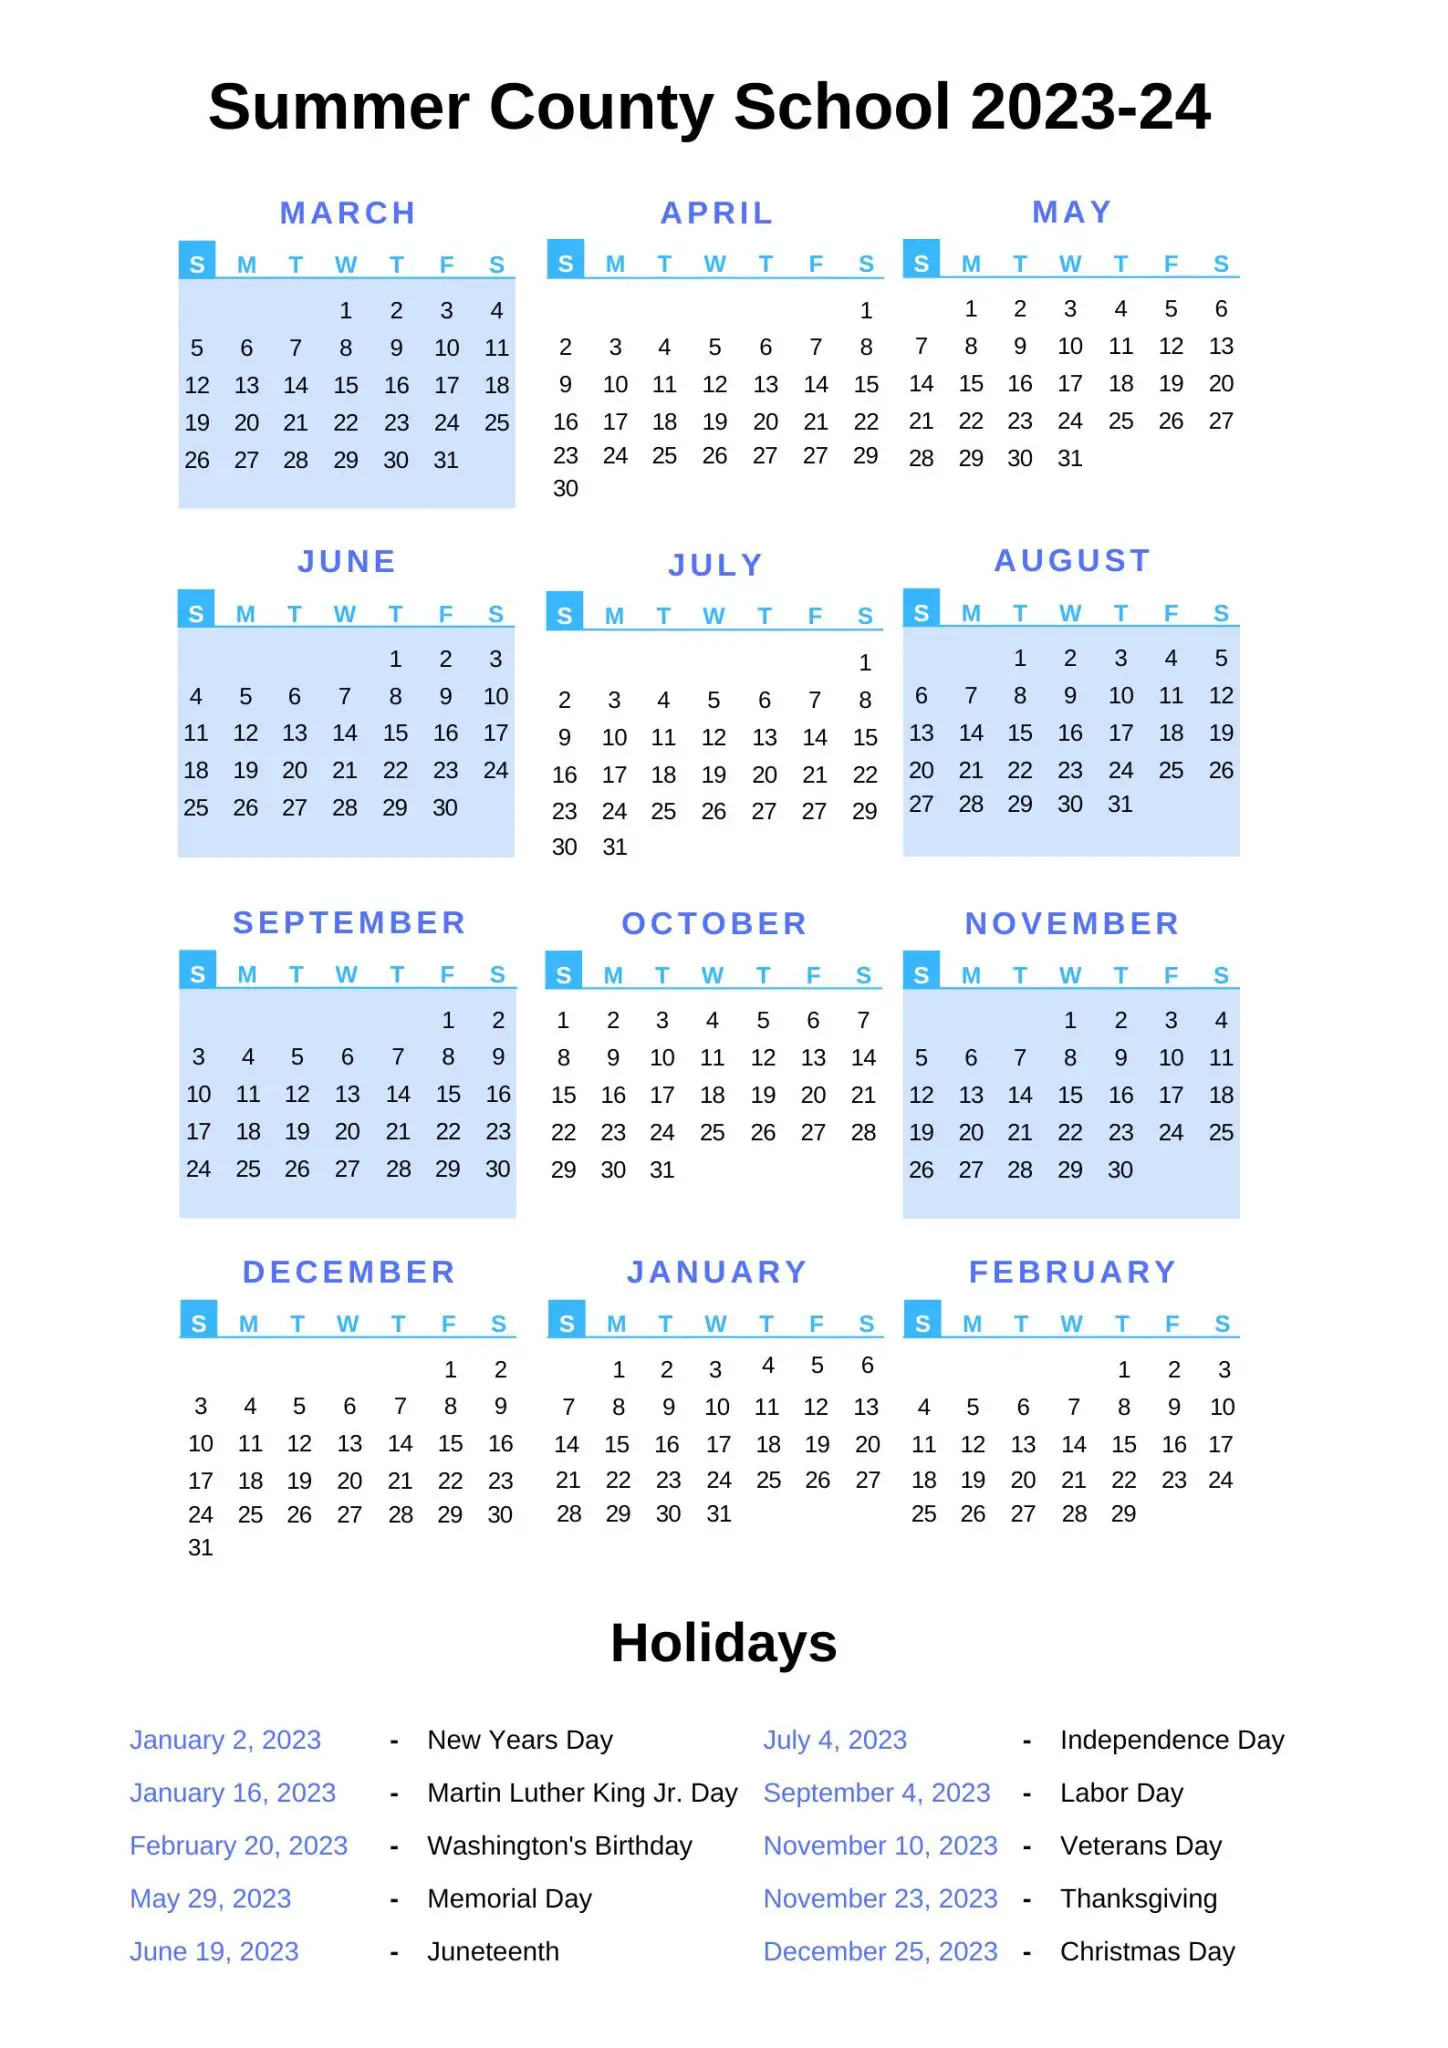 sumner-county-schools-calendar-holidays-2023-2024